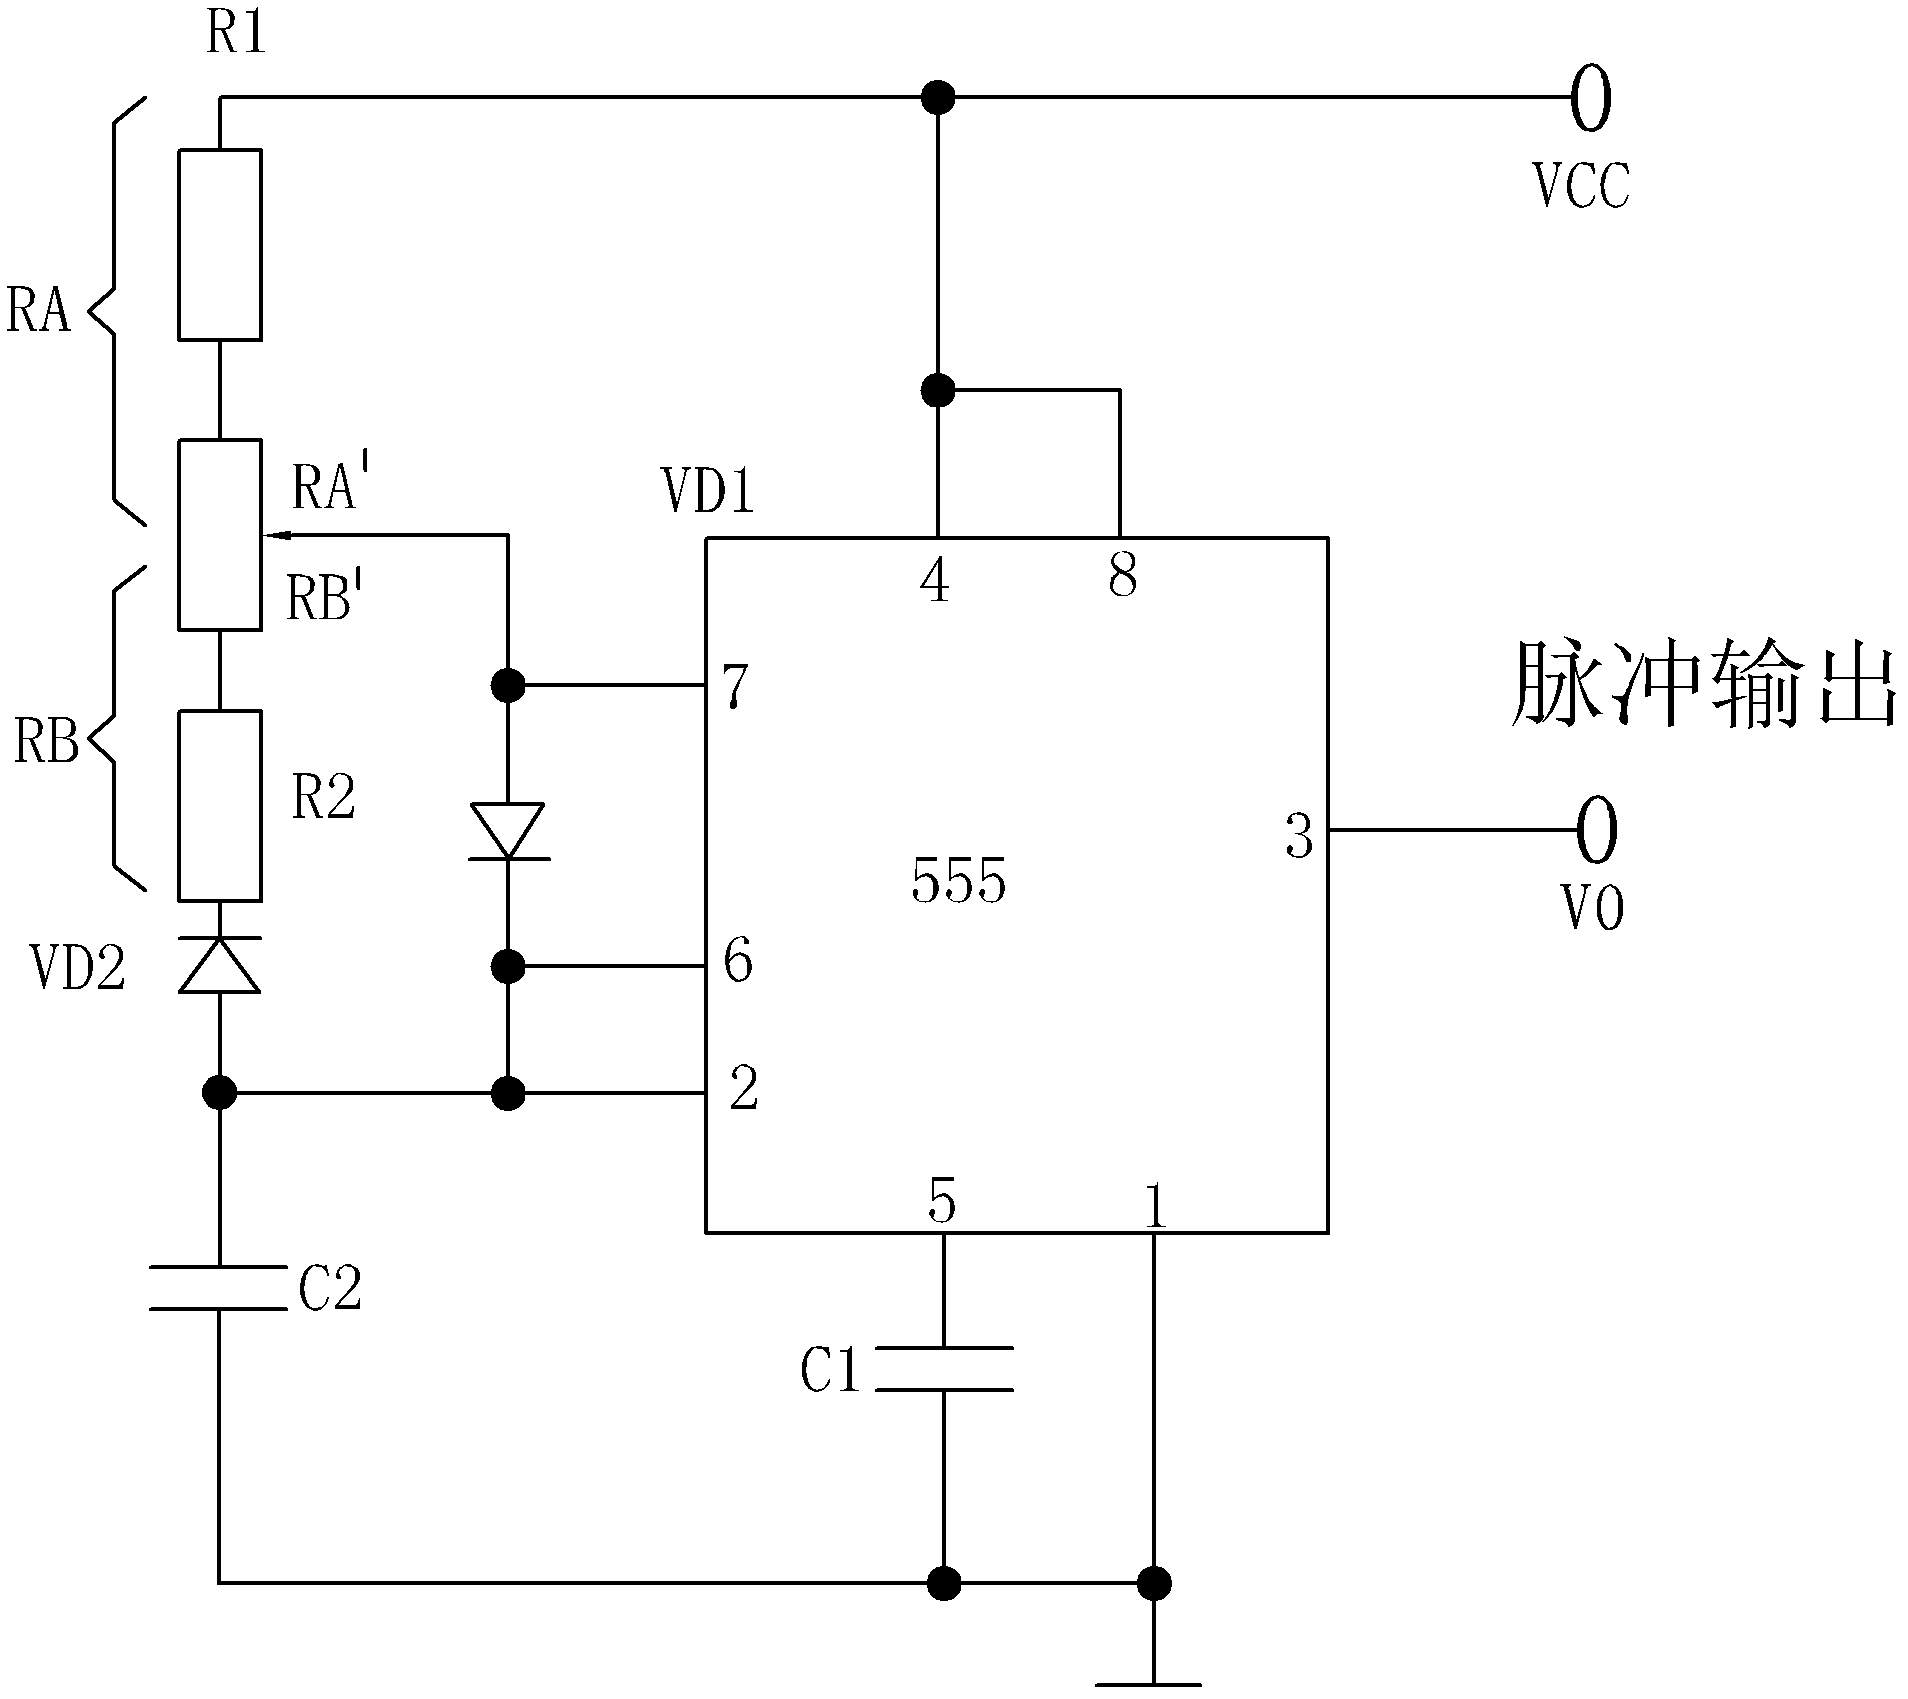 Power circuit for light emitting diode (LED) illuminating lamp